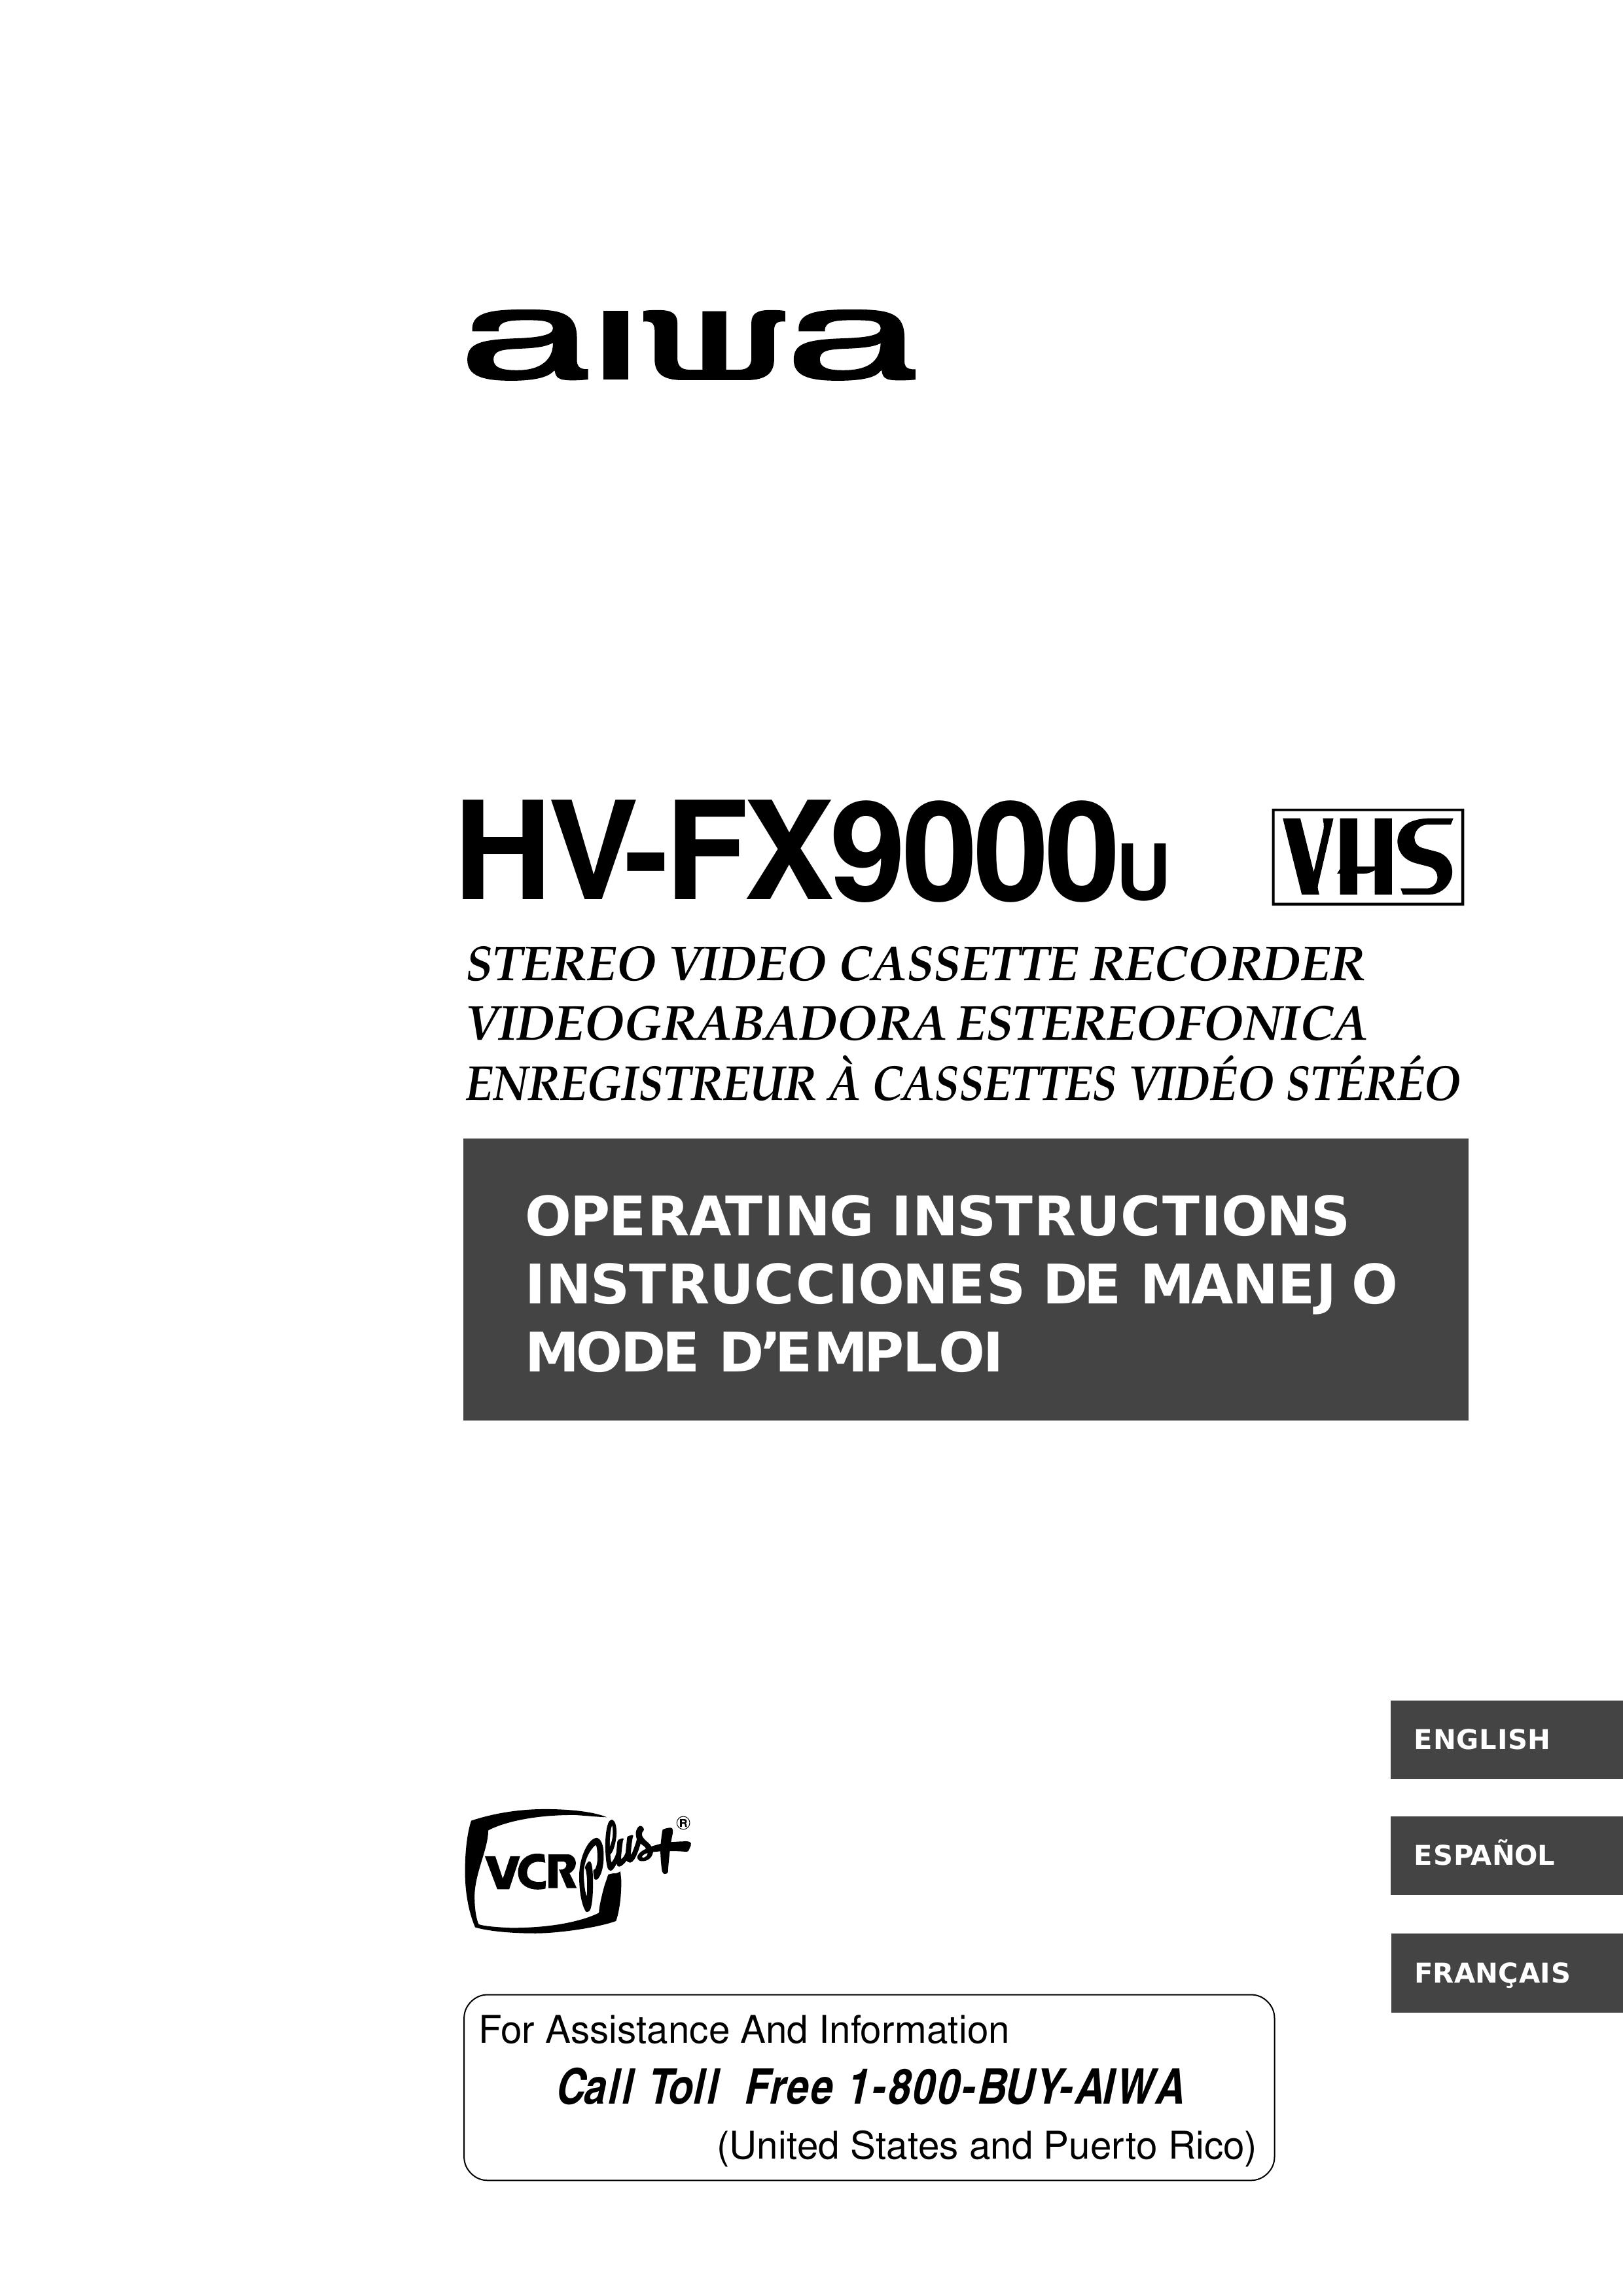 Aiwa HV-FX9000U Camcorder User Manual